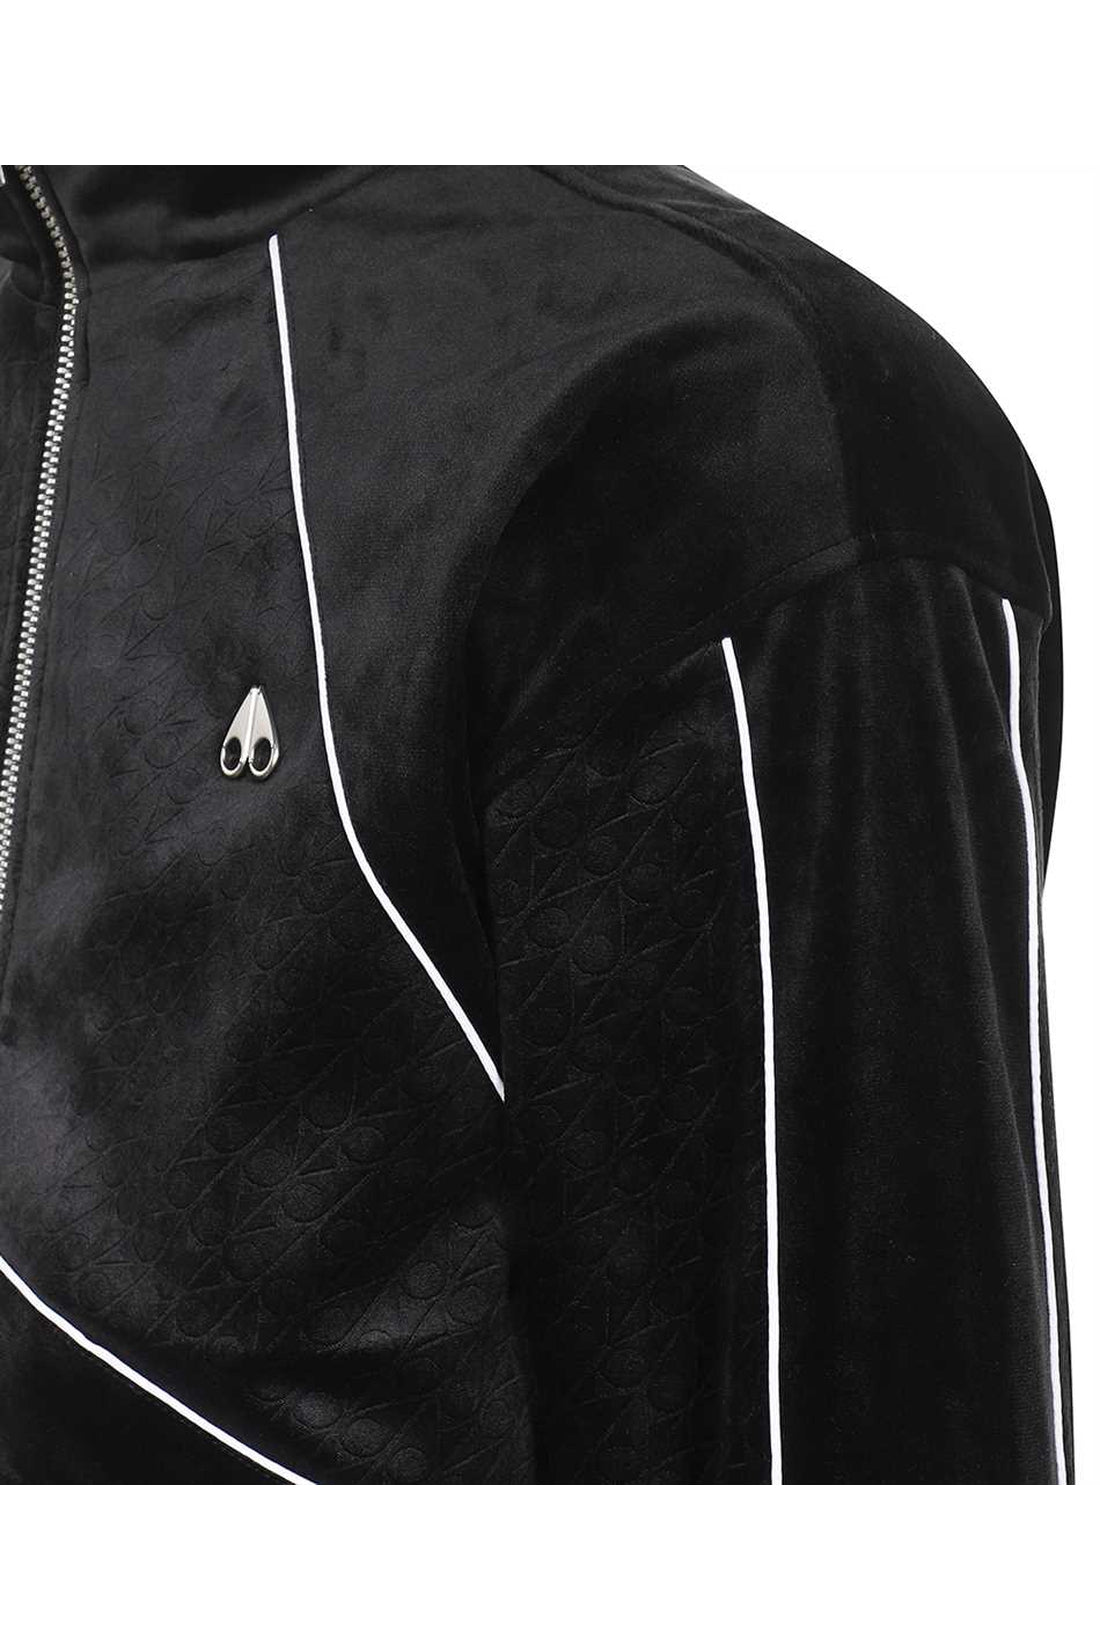 Moose Knuckles-OUTLET-SALE-Techno fabric full-zip sweatshirt-ARCHIVIST